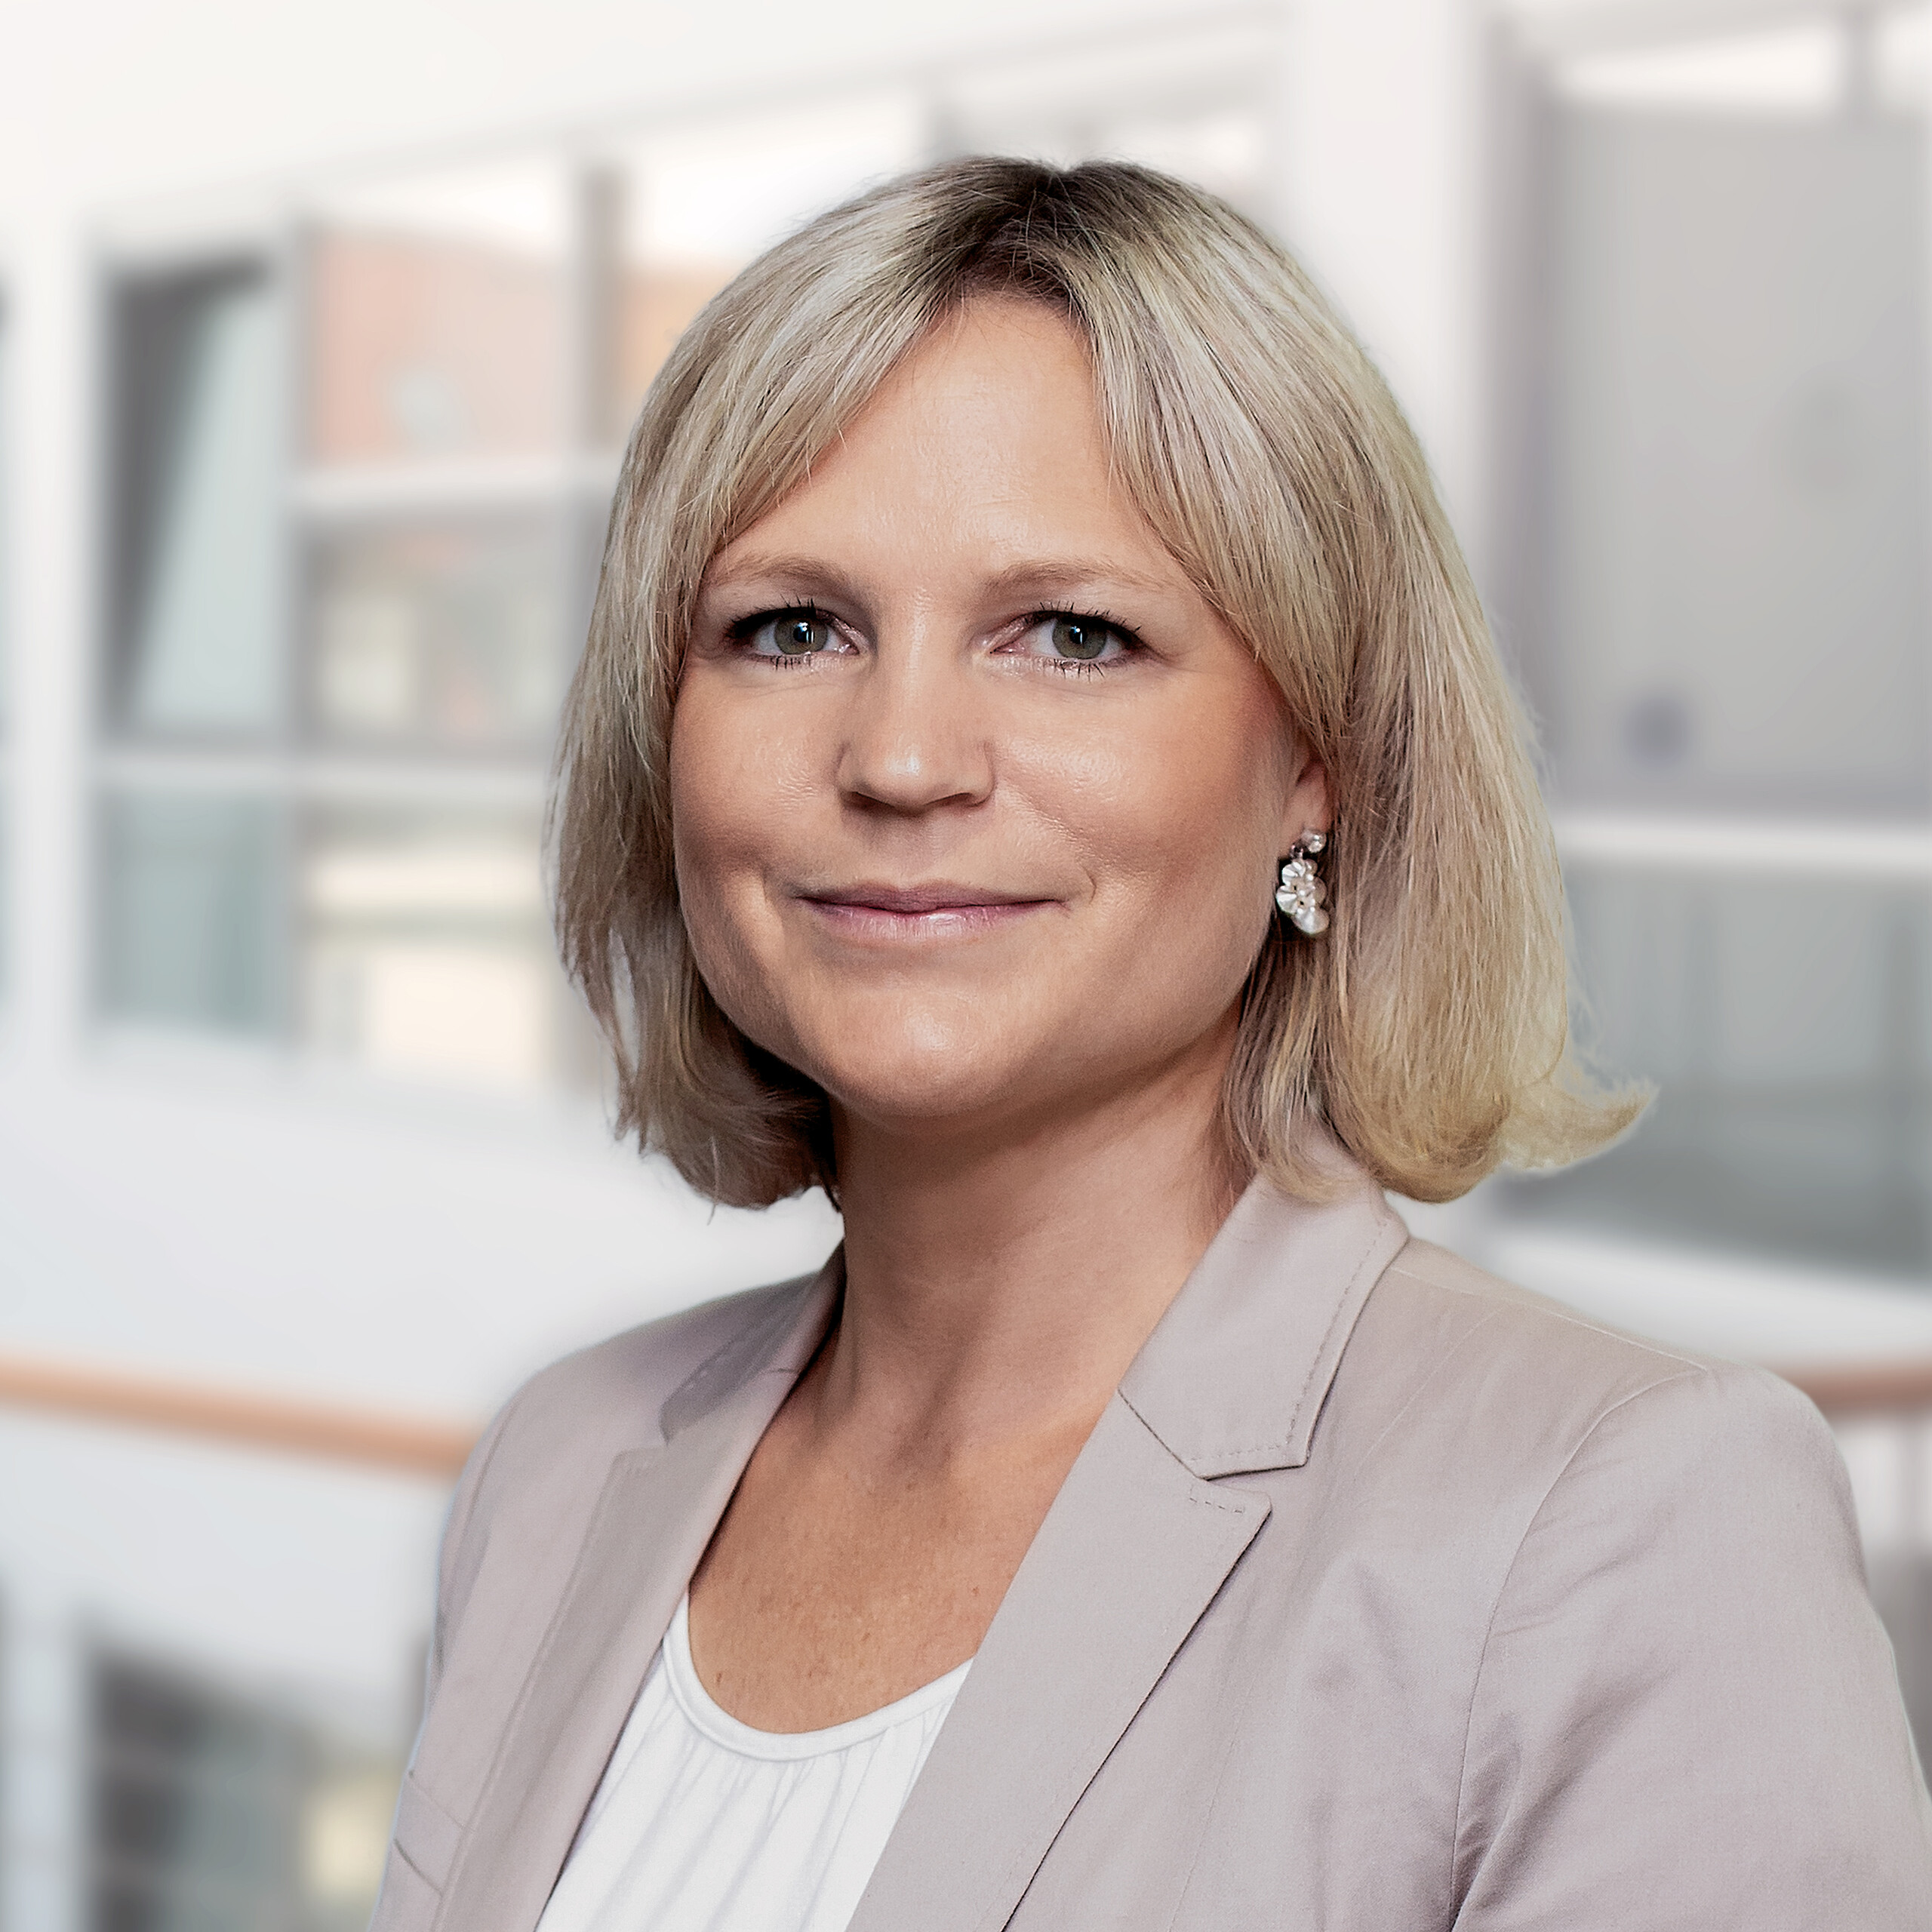 Annette Kröger, CEO North & Central Europe Allianz Real Estate